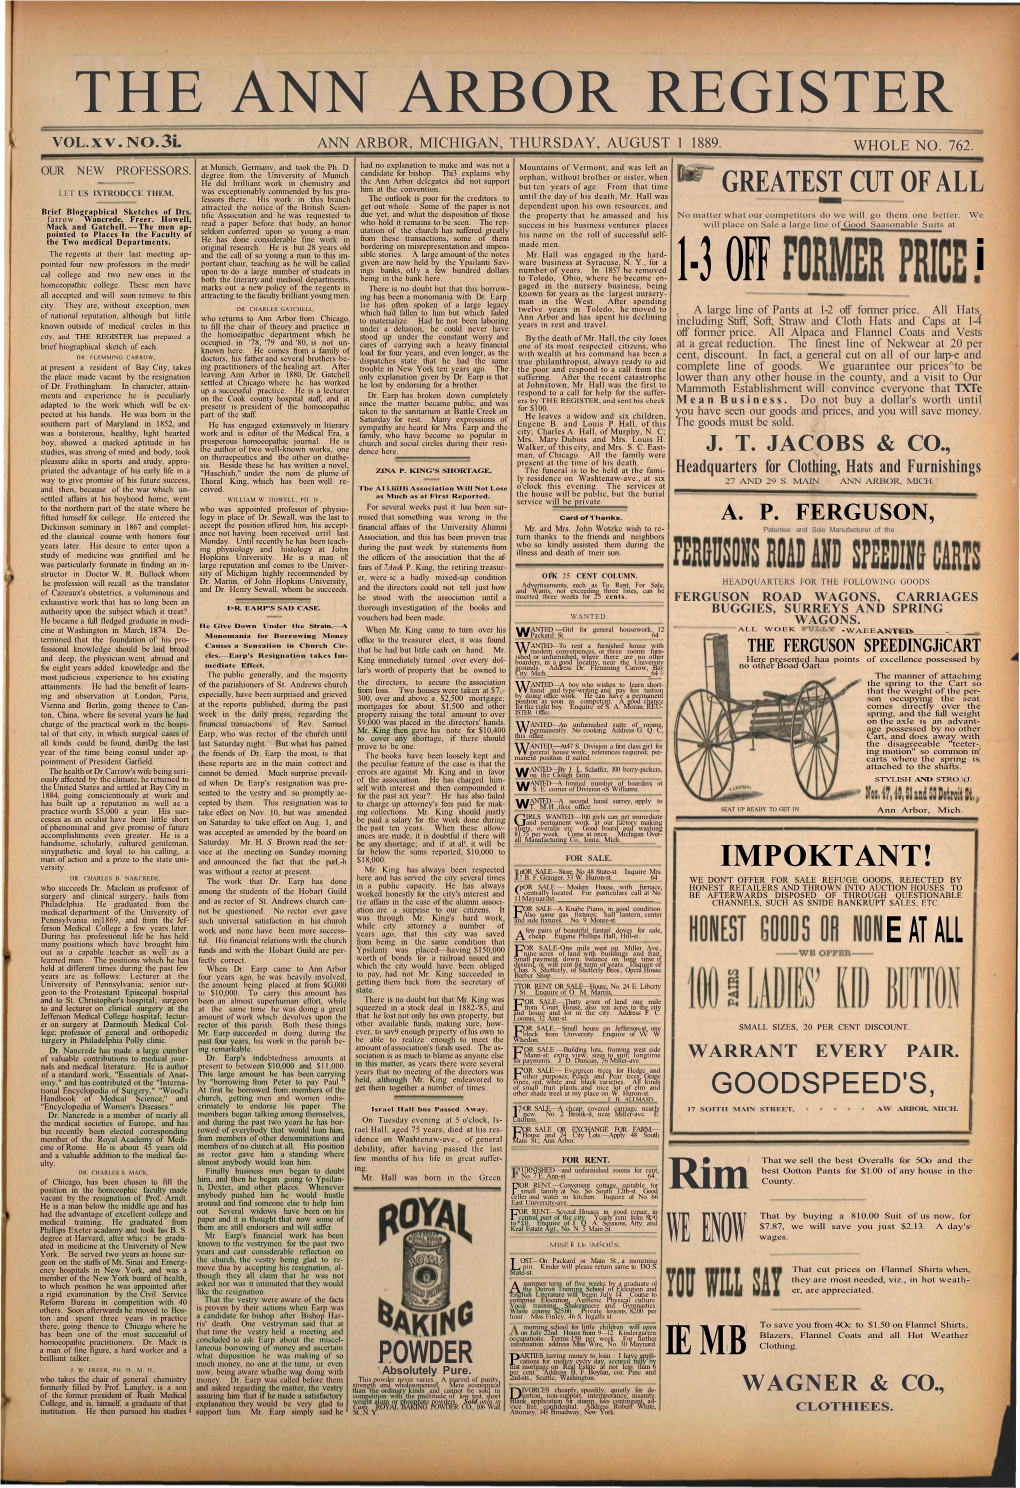 The Ann Arbor Register Vol